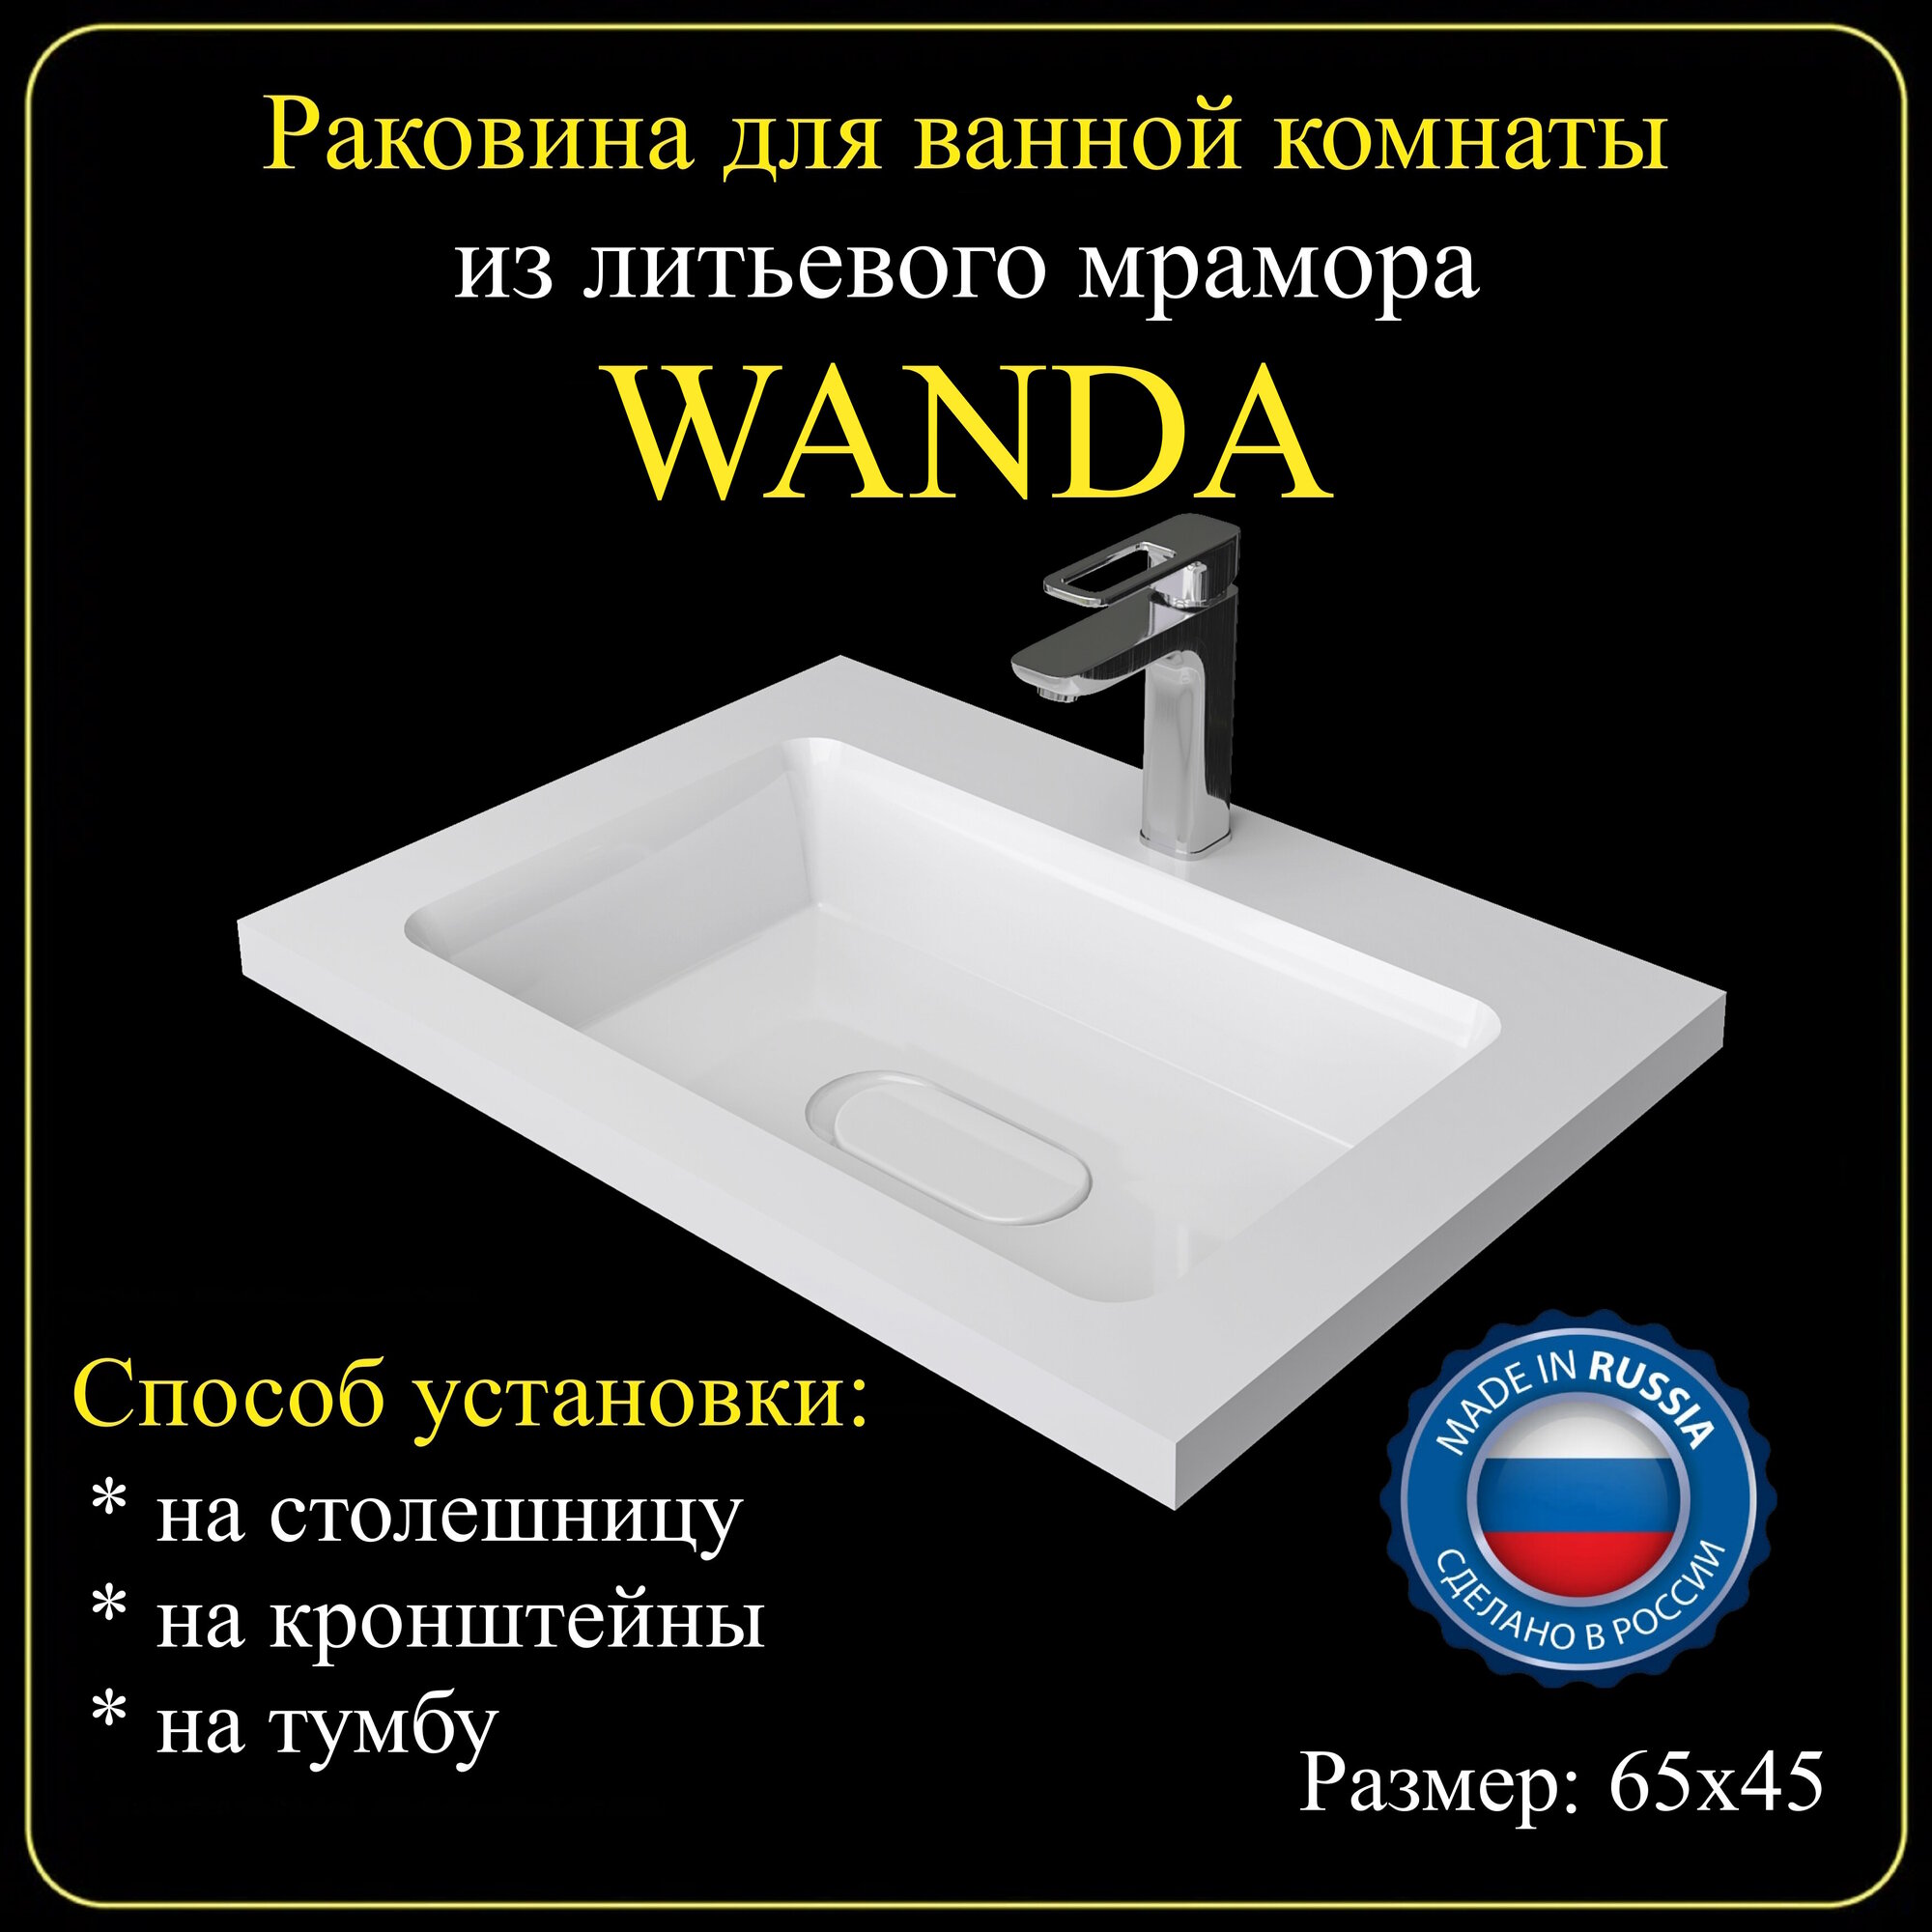 Раковина для ванной комнаты "WANDA" 65х45 из литьевого мрамора JOYMY - фотография № 1